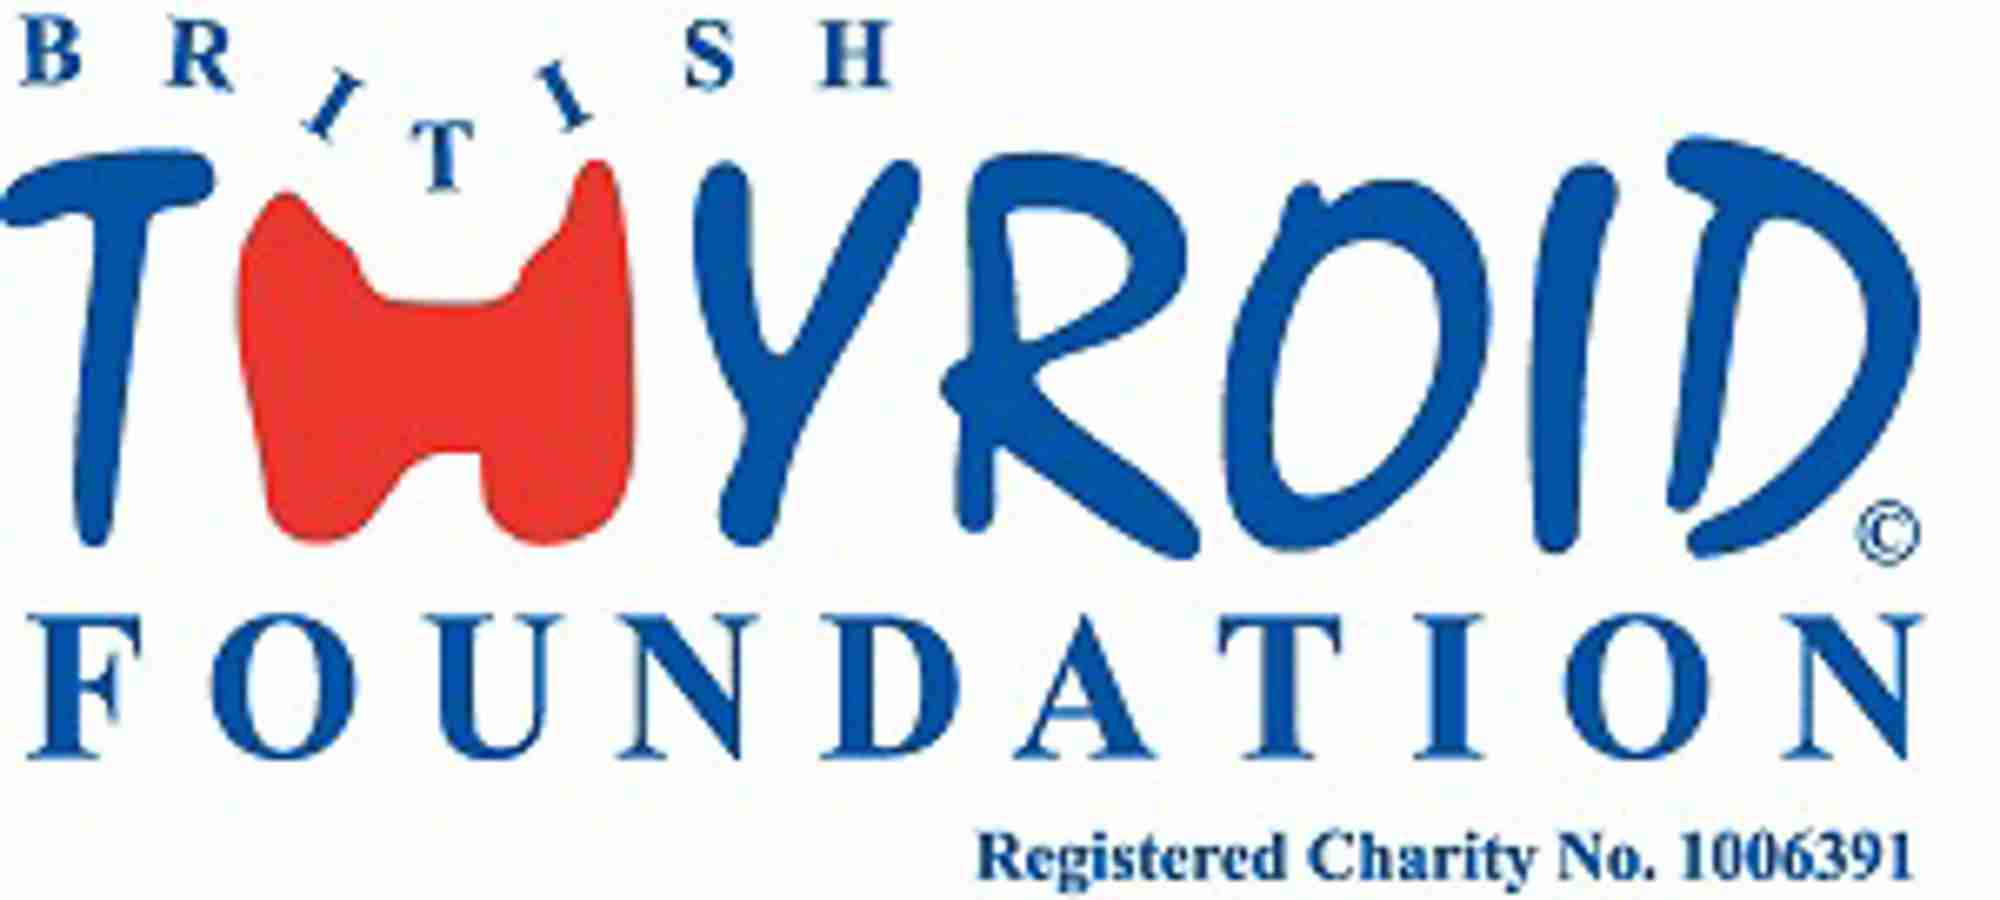 P15 British Thyroid Foundation logo.jpg